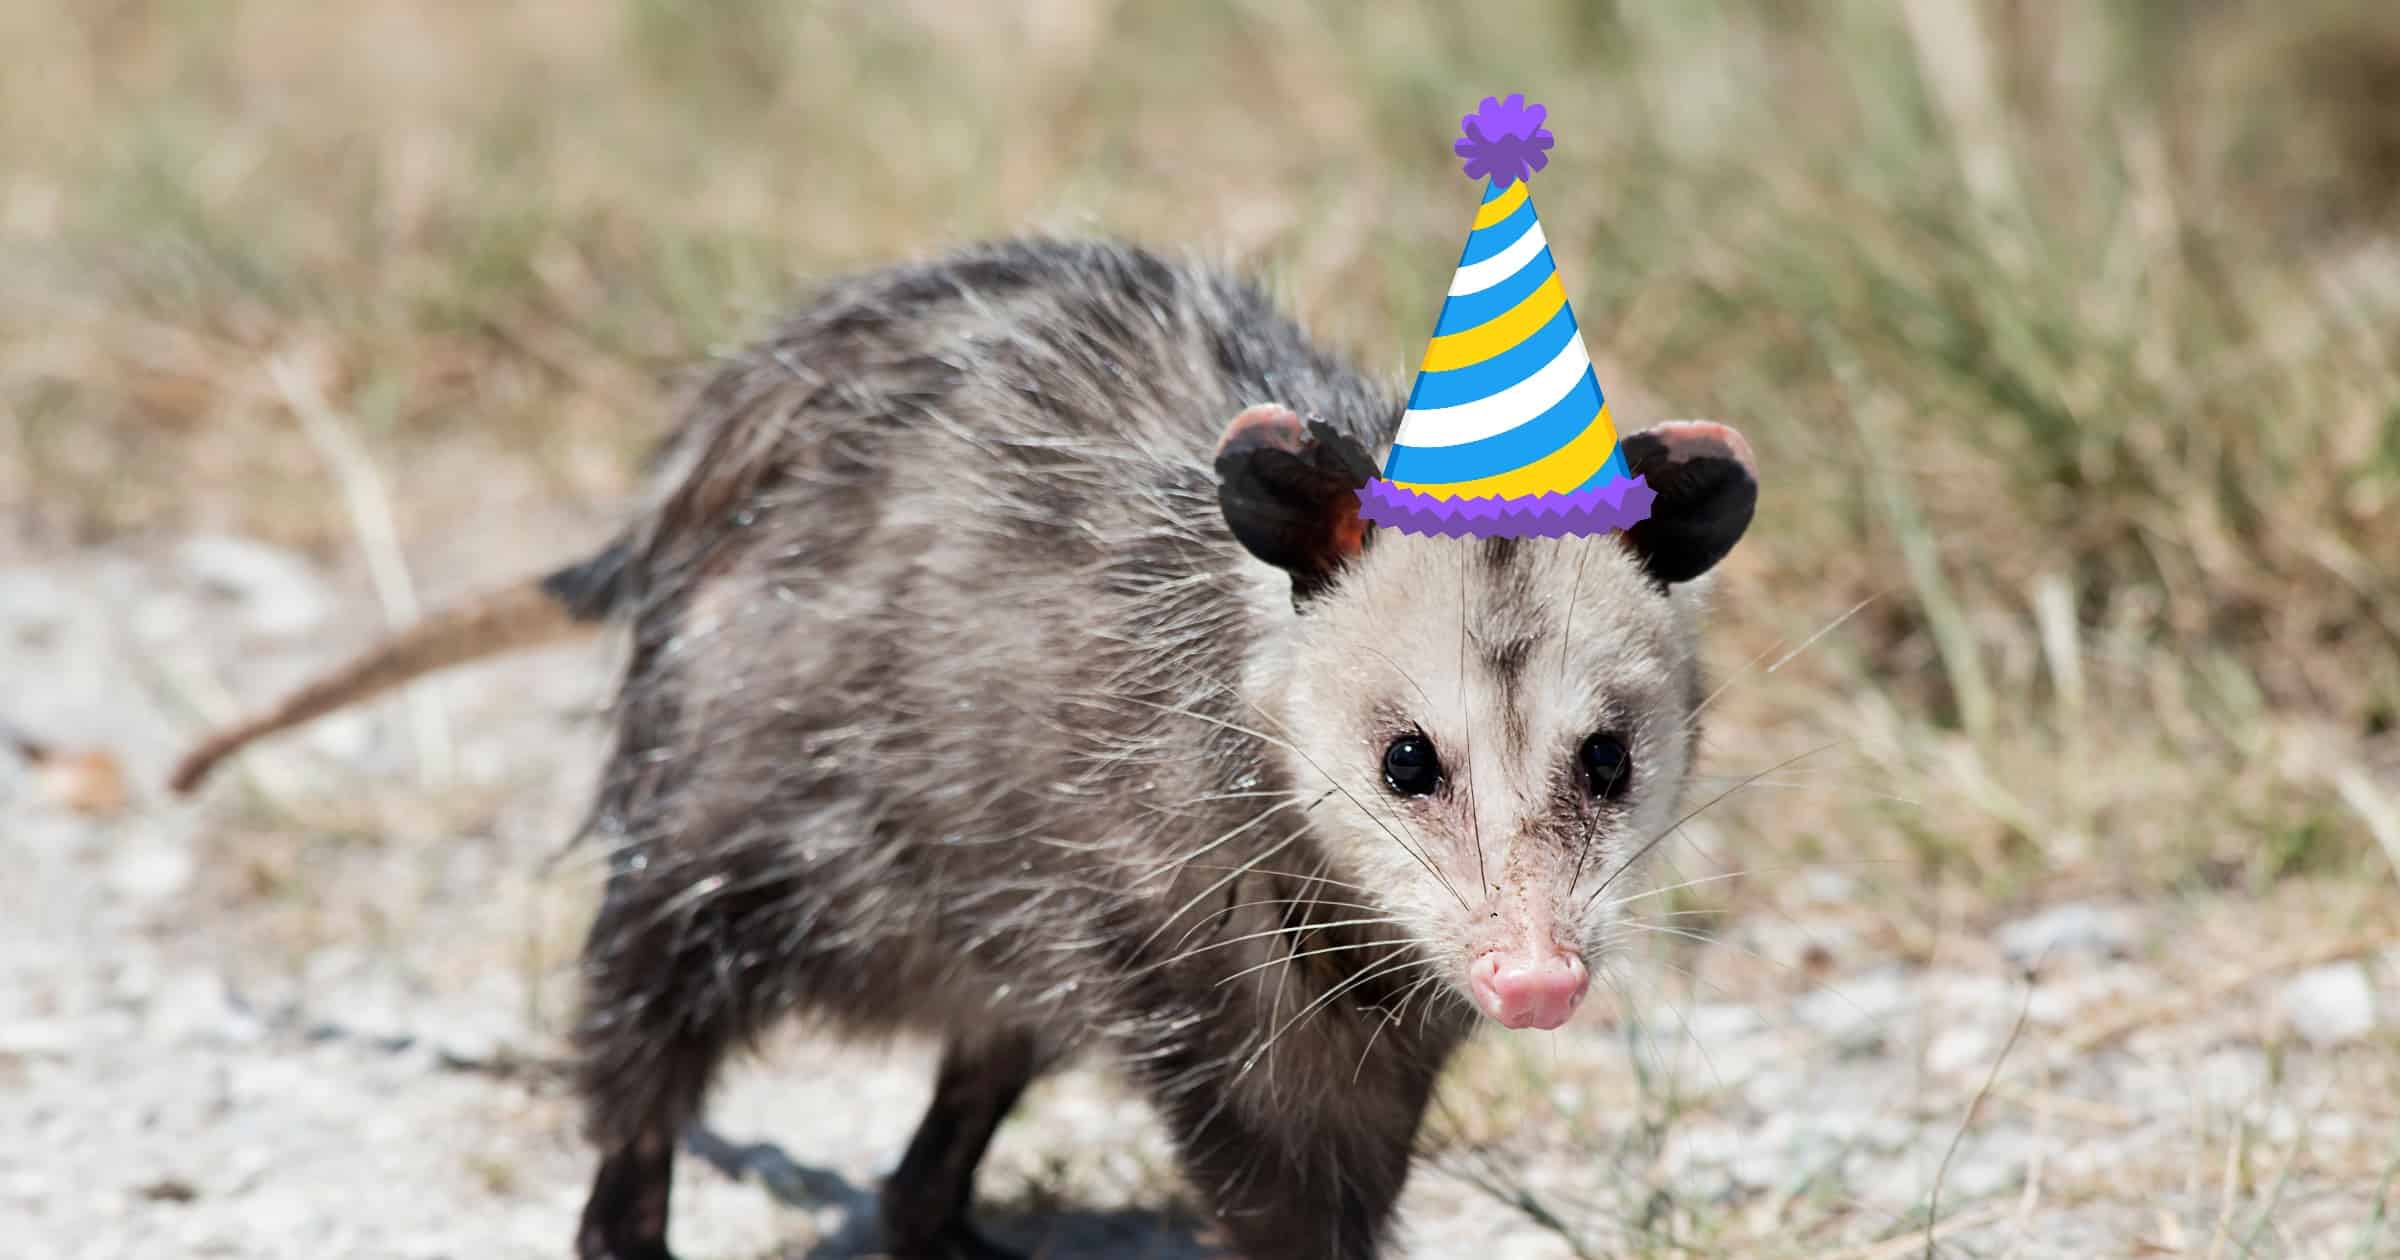 Opossum wearing party hat